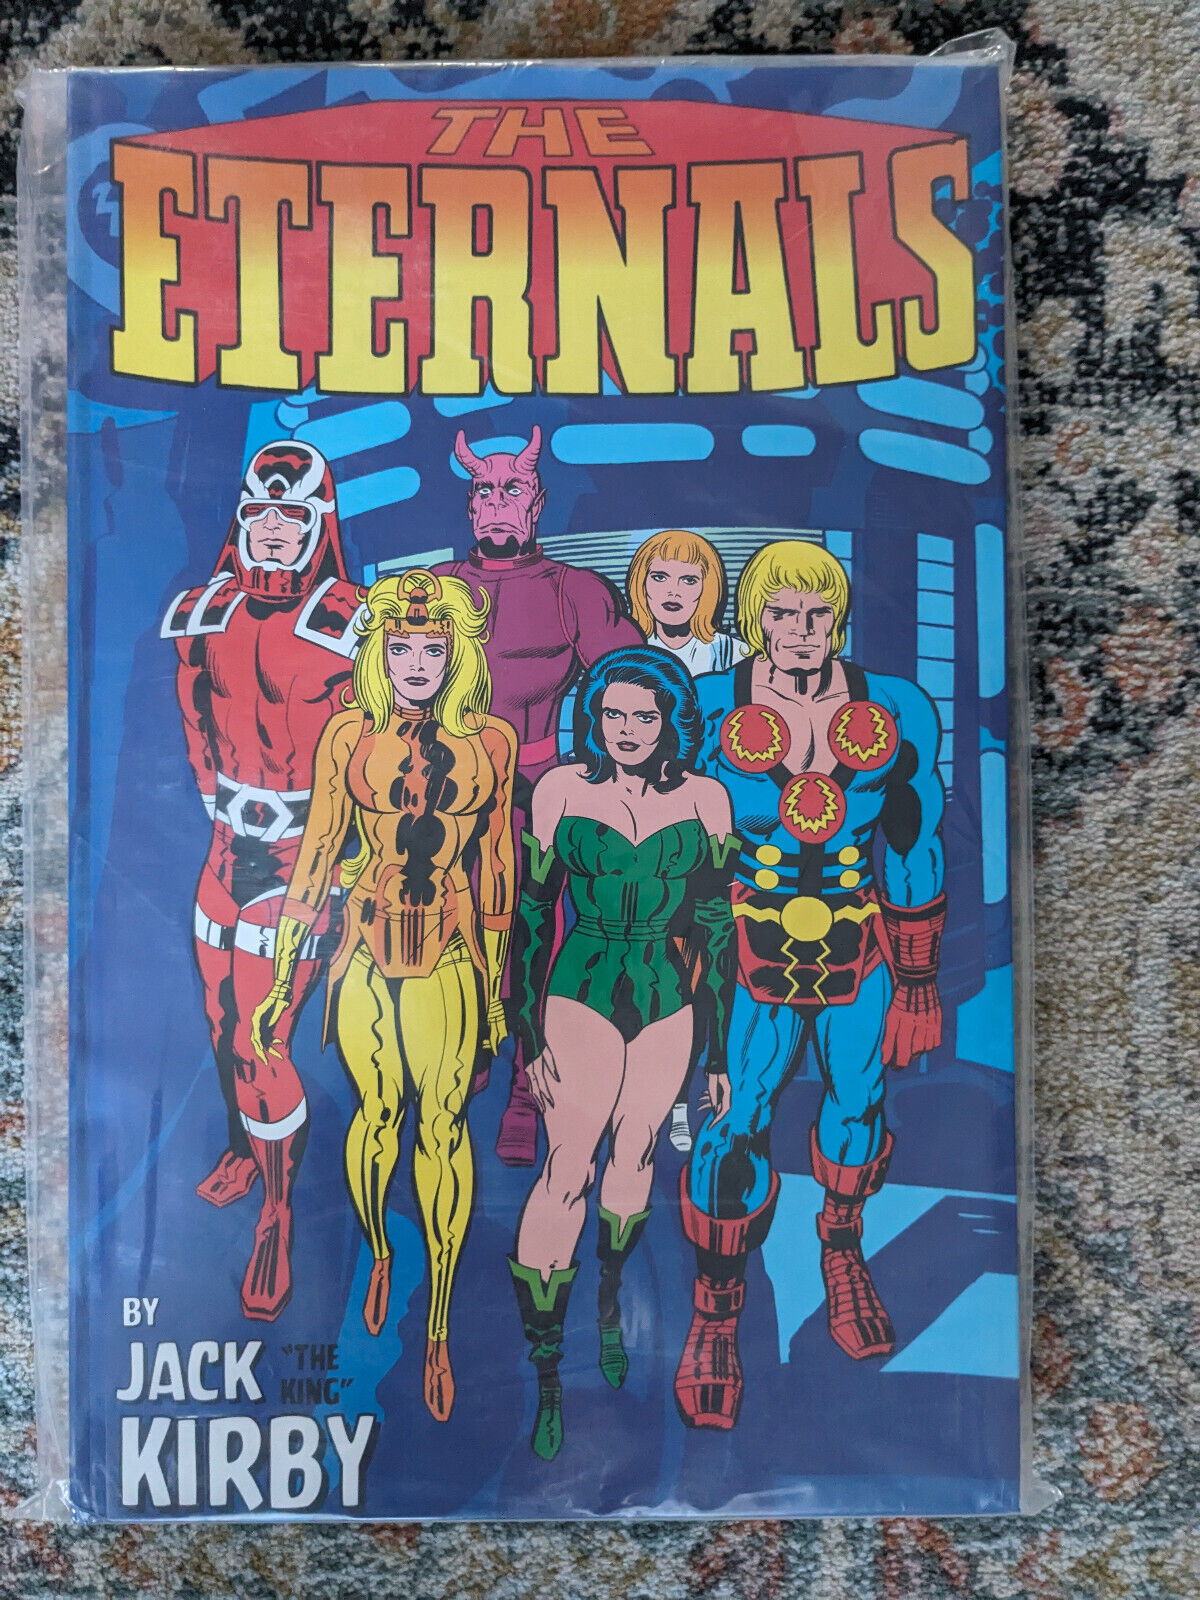 THE ETERNALS  Jack Kirby MONSTER SIZED New Oversized Hardcover HC MARVEL Comics